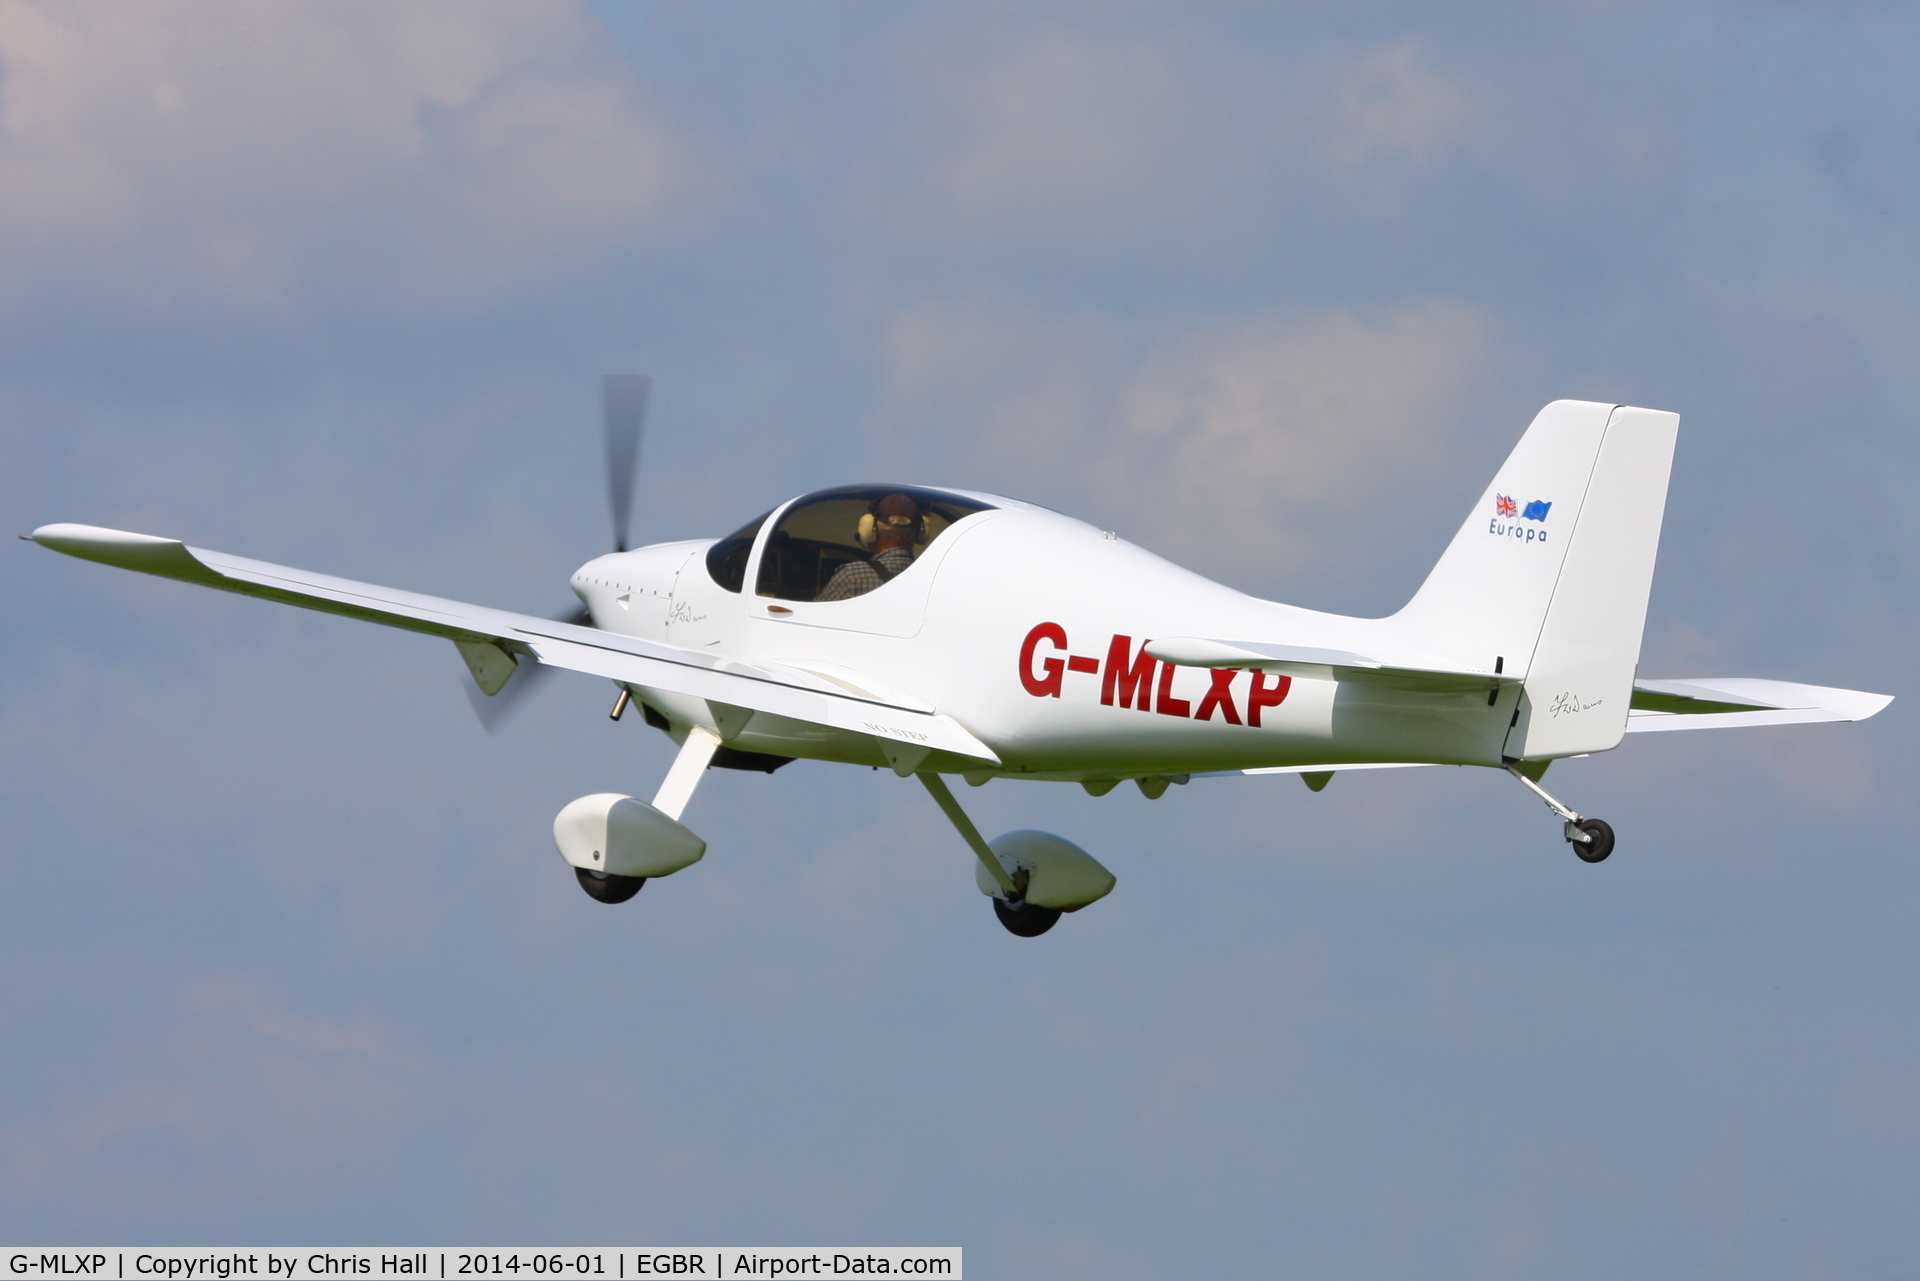 G-MLXP, 2013 Europa  C/N PFA 247-12974, at Breighton's Open Cockpit & Biplane Fly-in, 2014